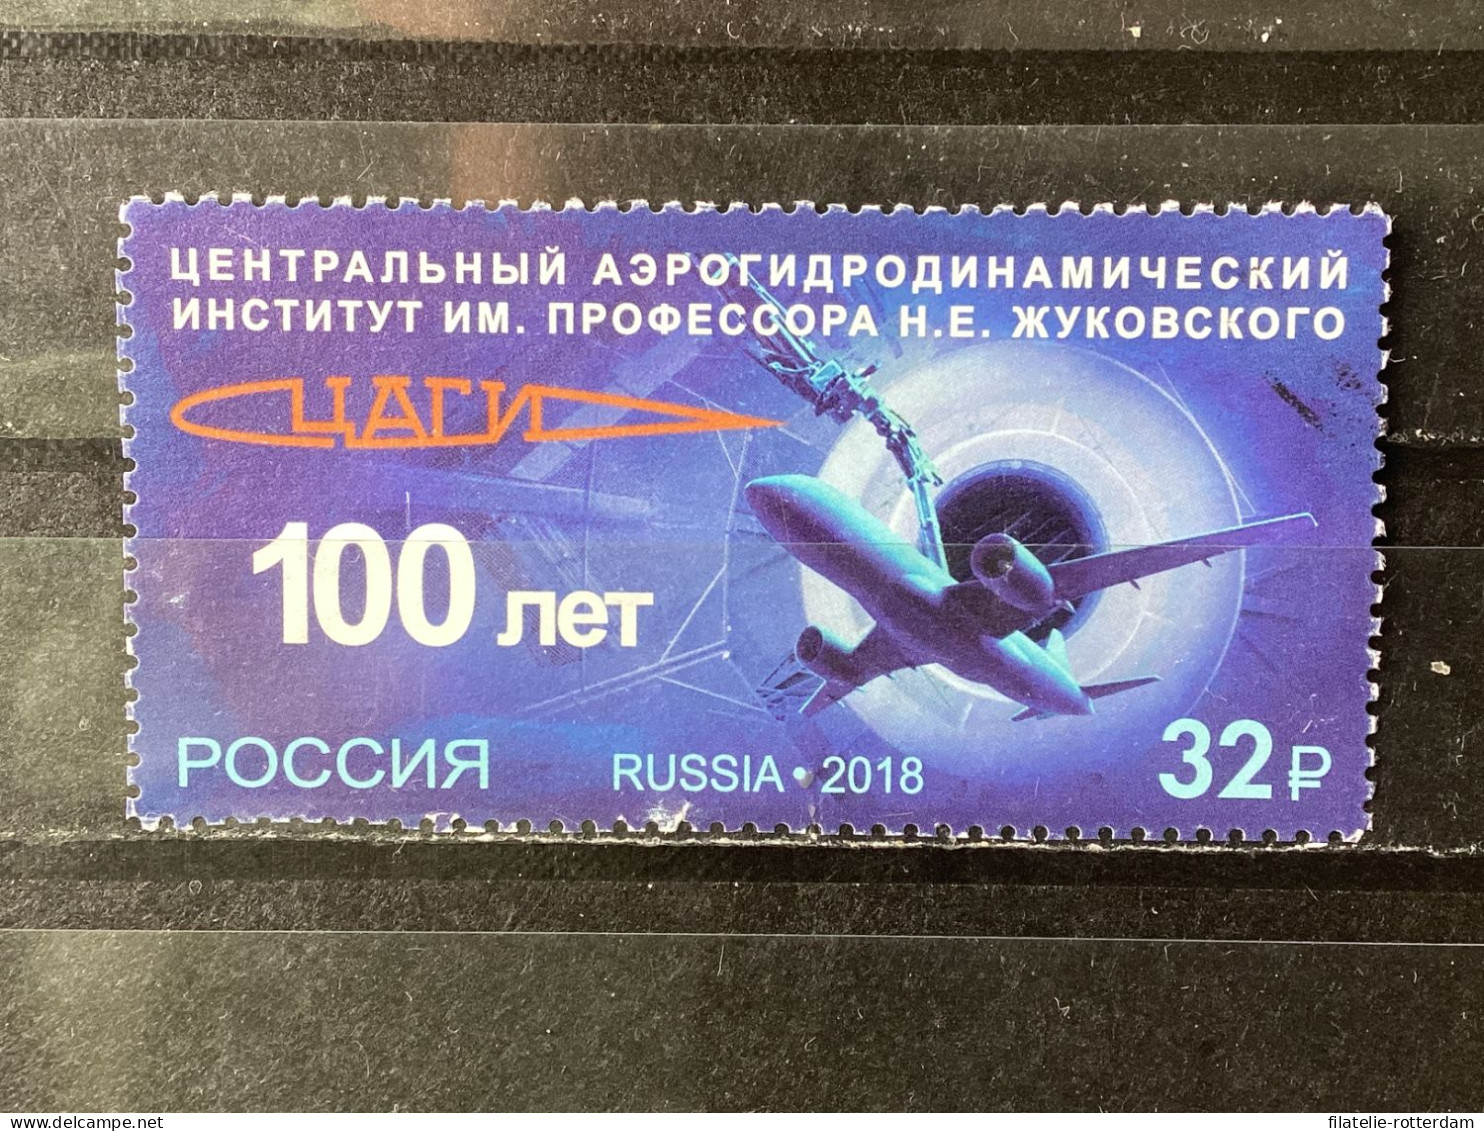 Russia / Rusland - Zhukovsky Central Aerohydrodynamic Institute (32) 2018 - Gebruikt